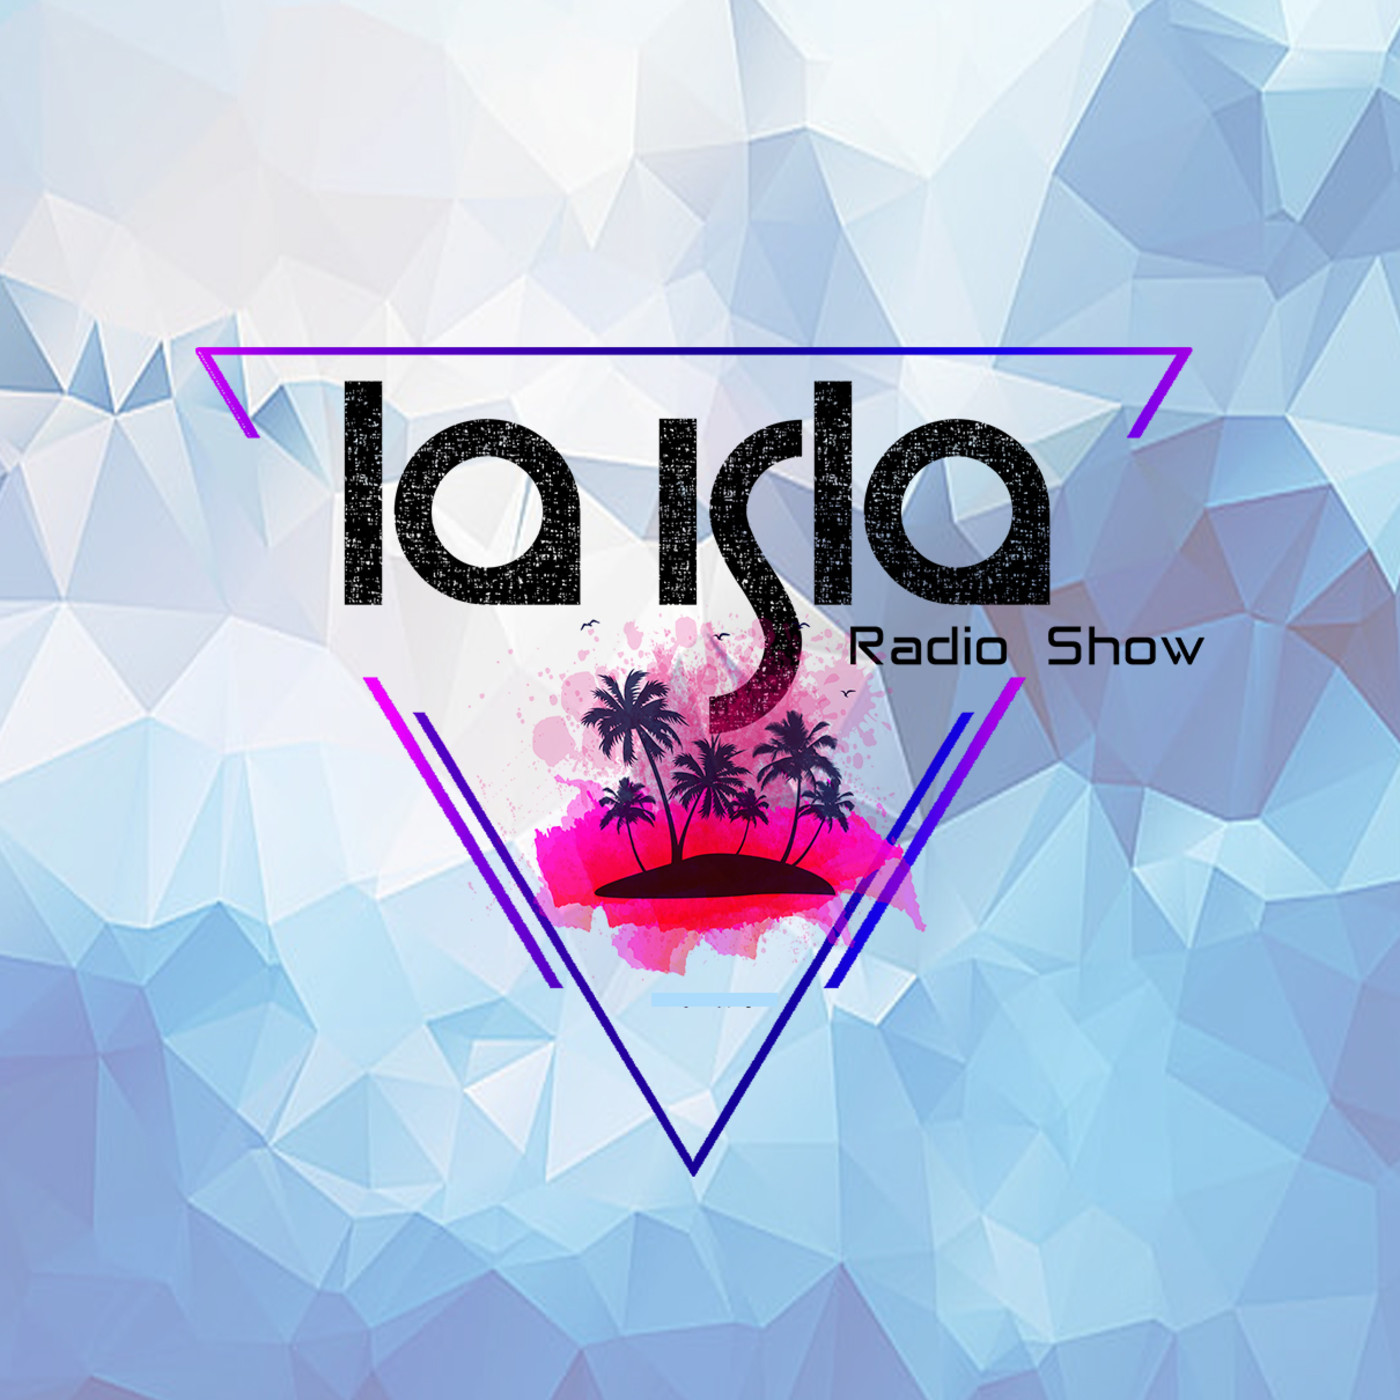 La Isla Radio Show #71 PART 1 - 5/08/21